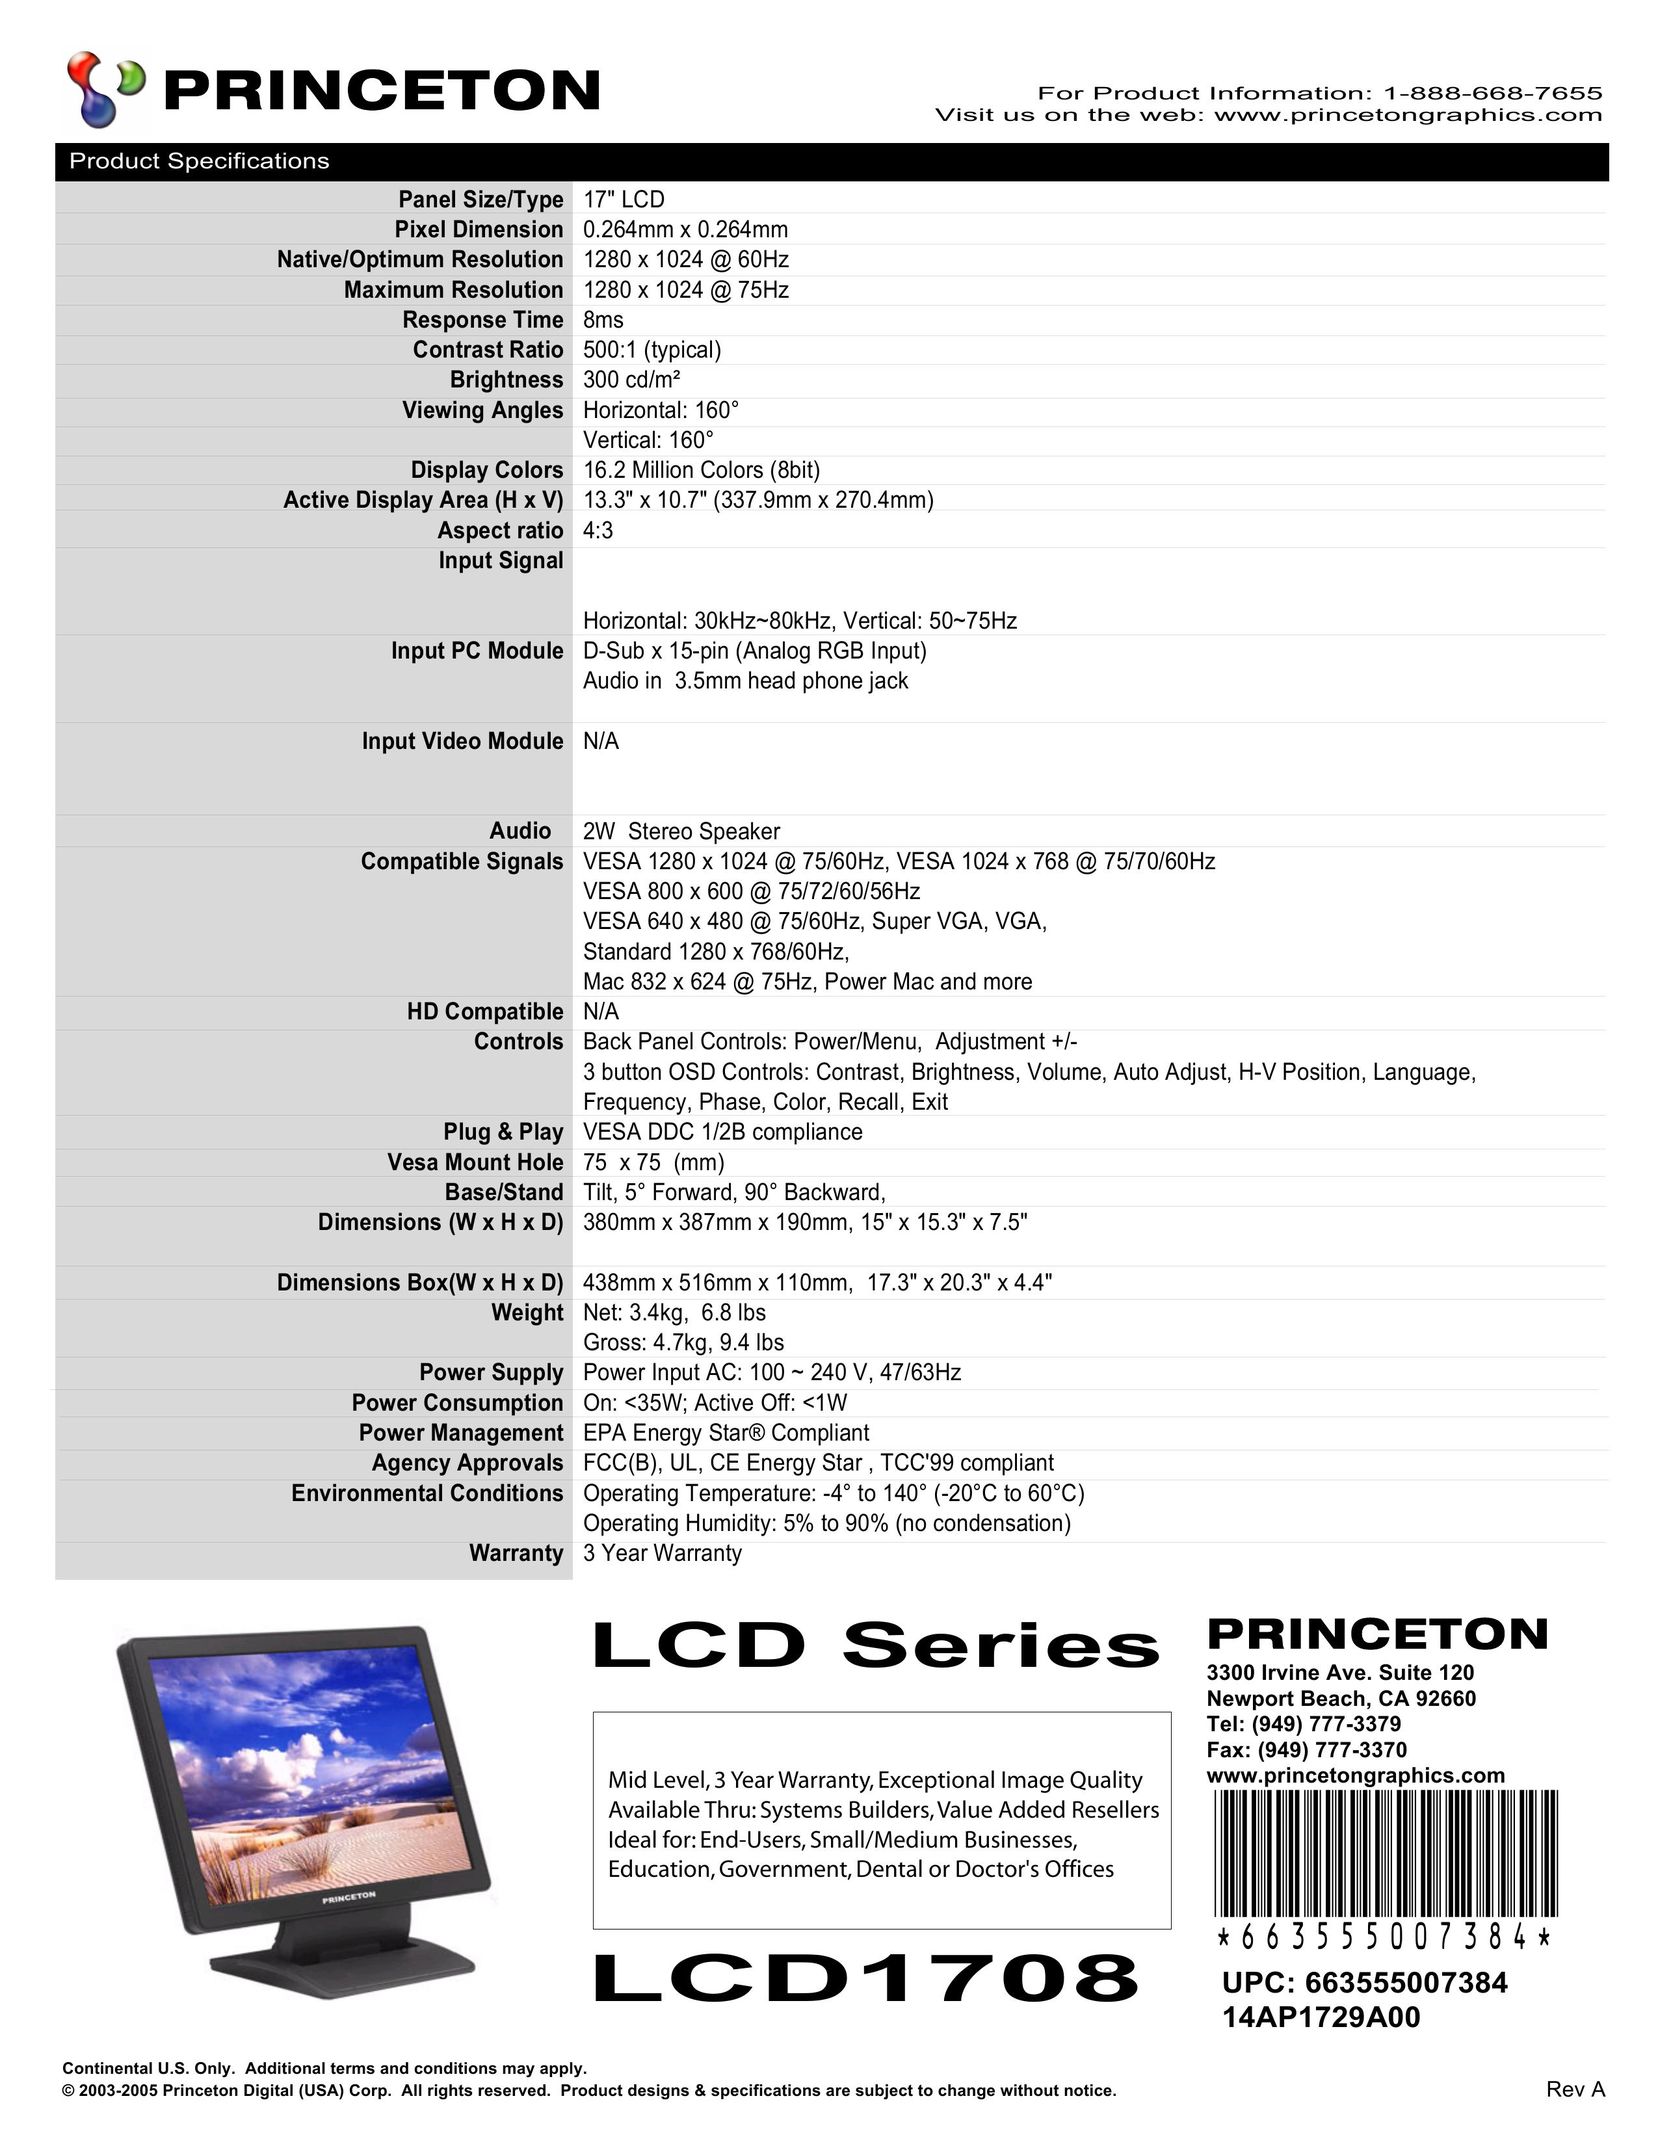 Princeton LCD 1708 Flat Panel Television User Manual